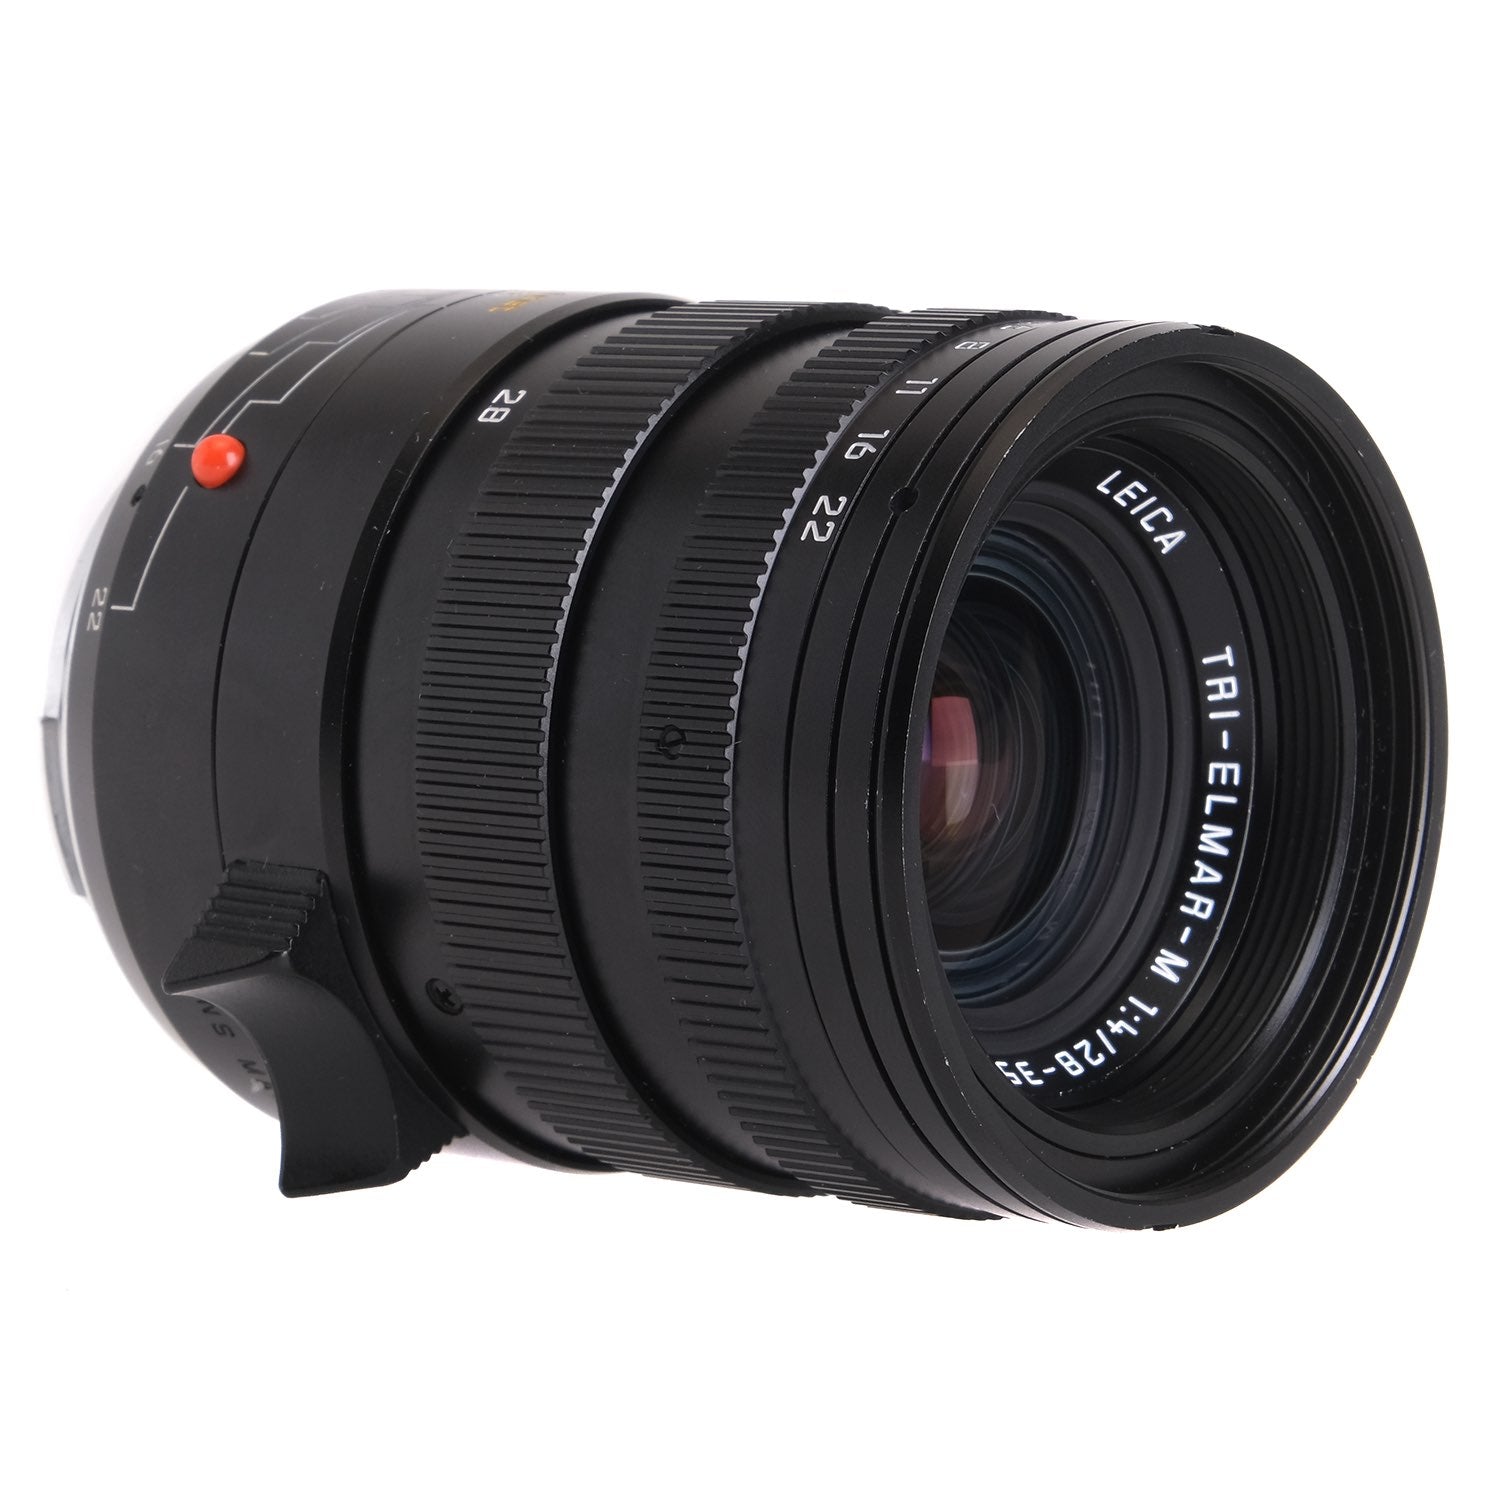 Leica Lens Hood #12450 USED-MINT - For E49 28-35-50mm Tri-Elmar-M Len